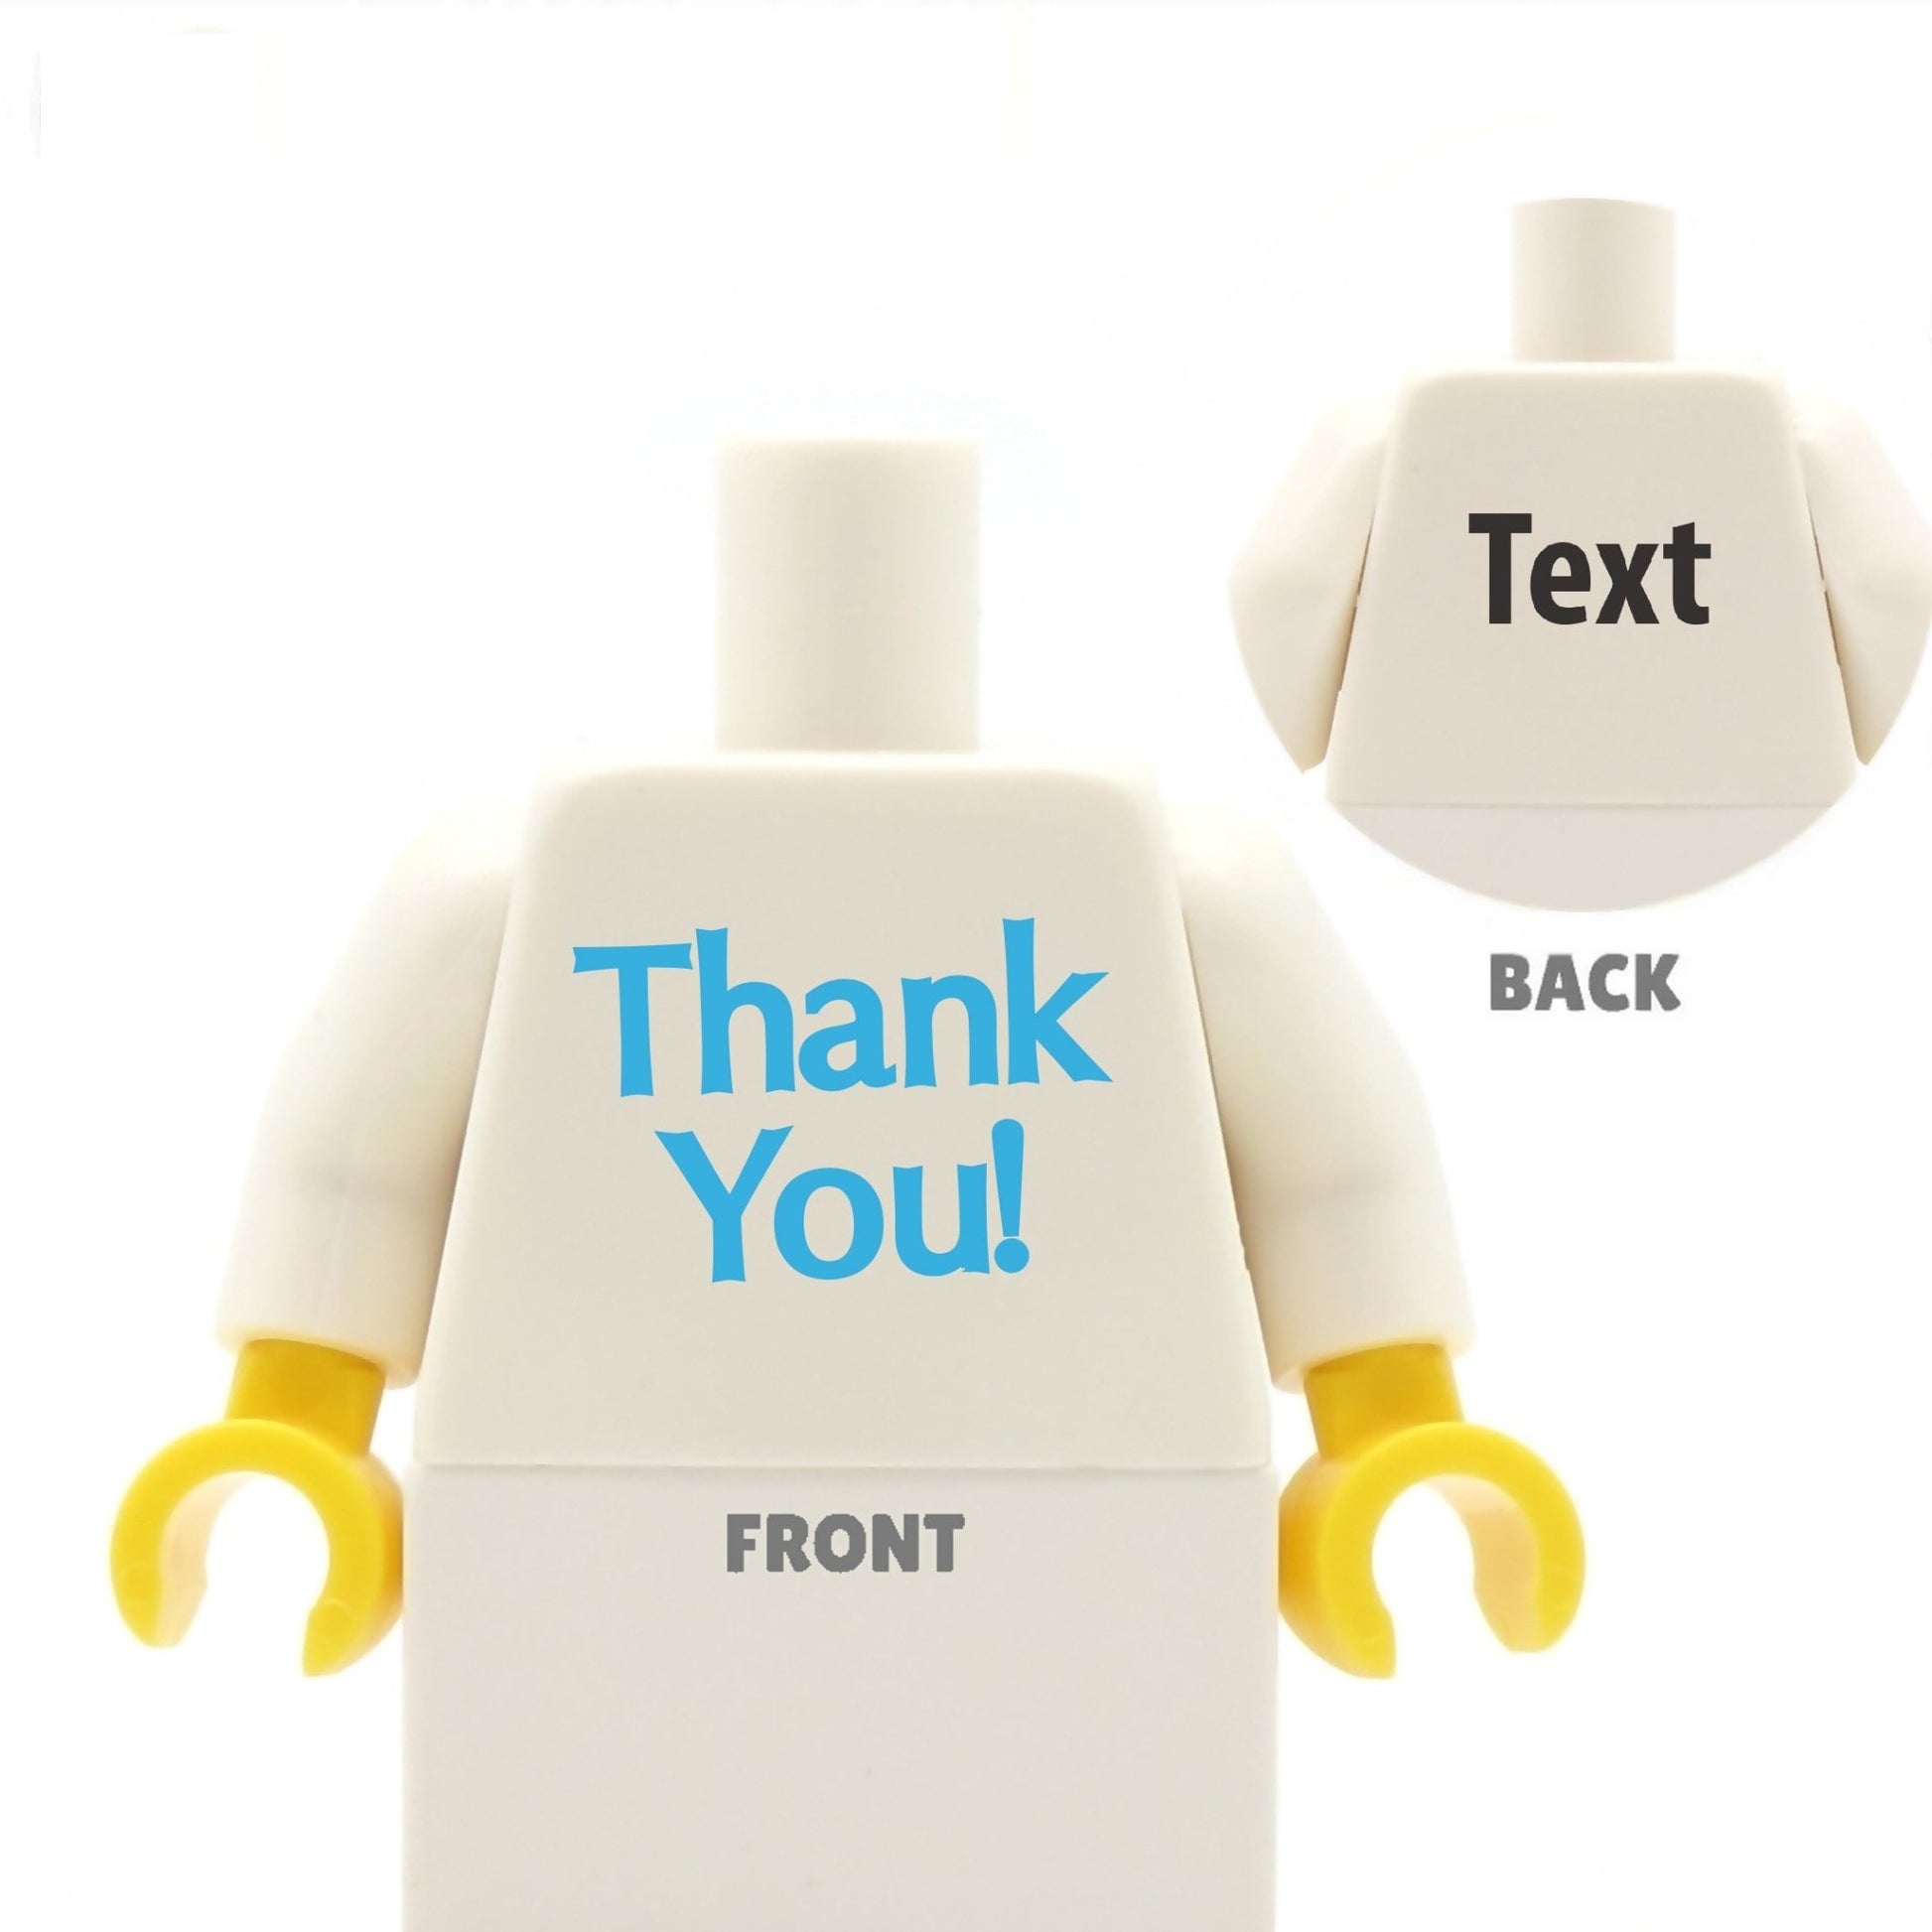 Thank you! - Custom LEGO Torso